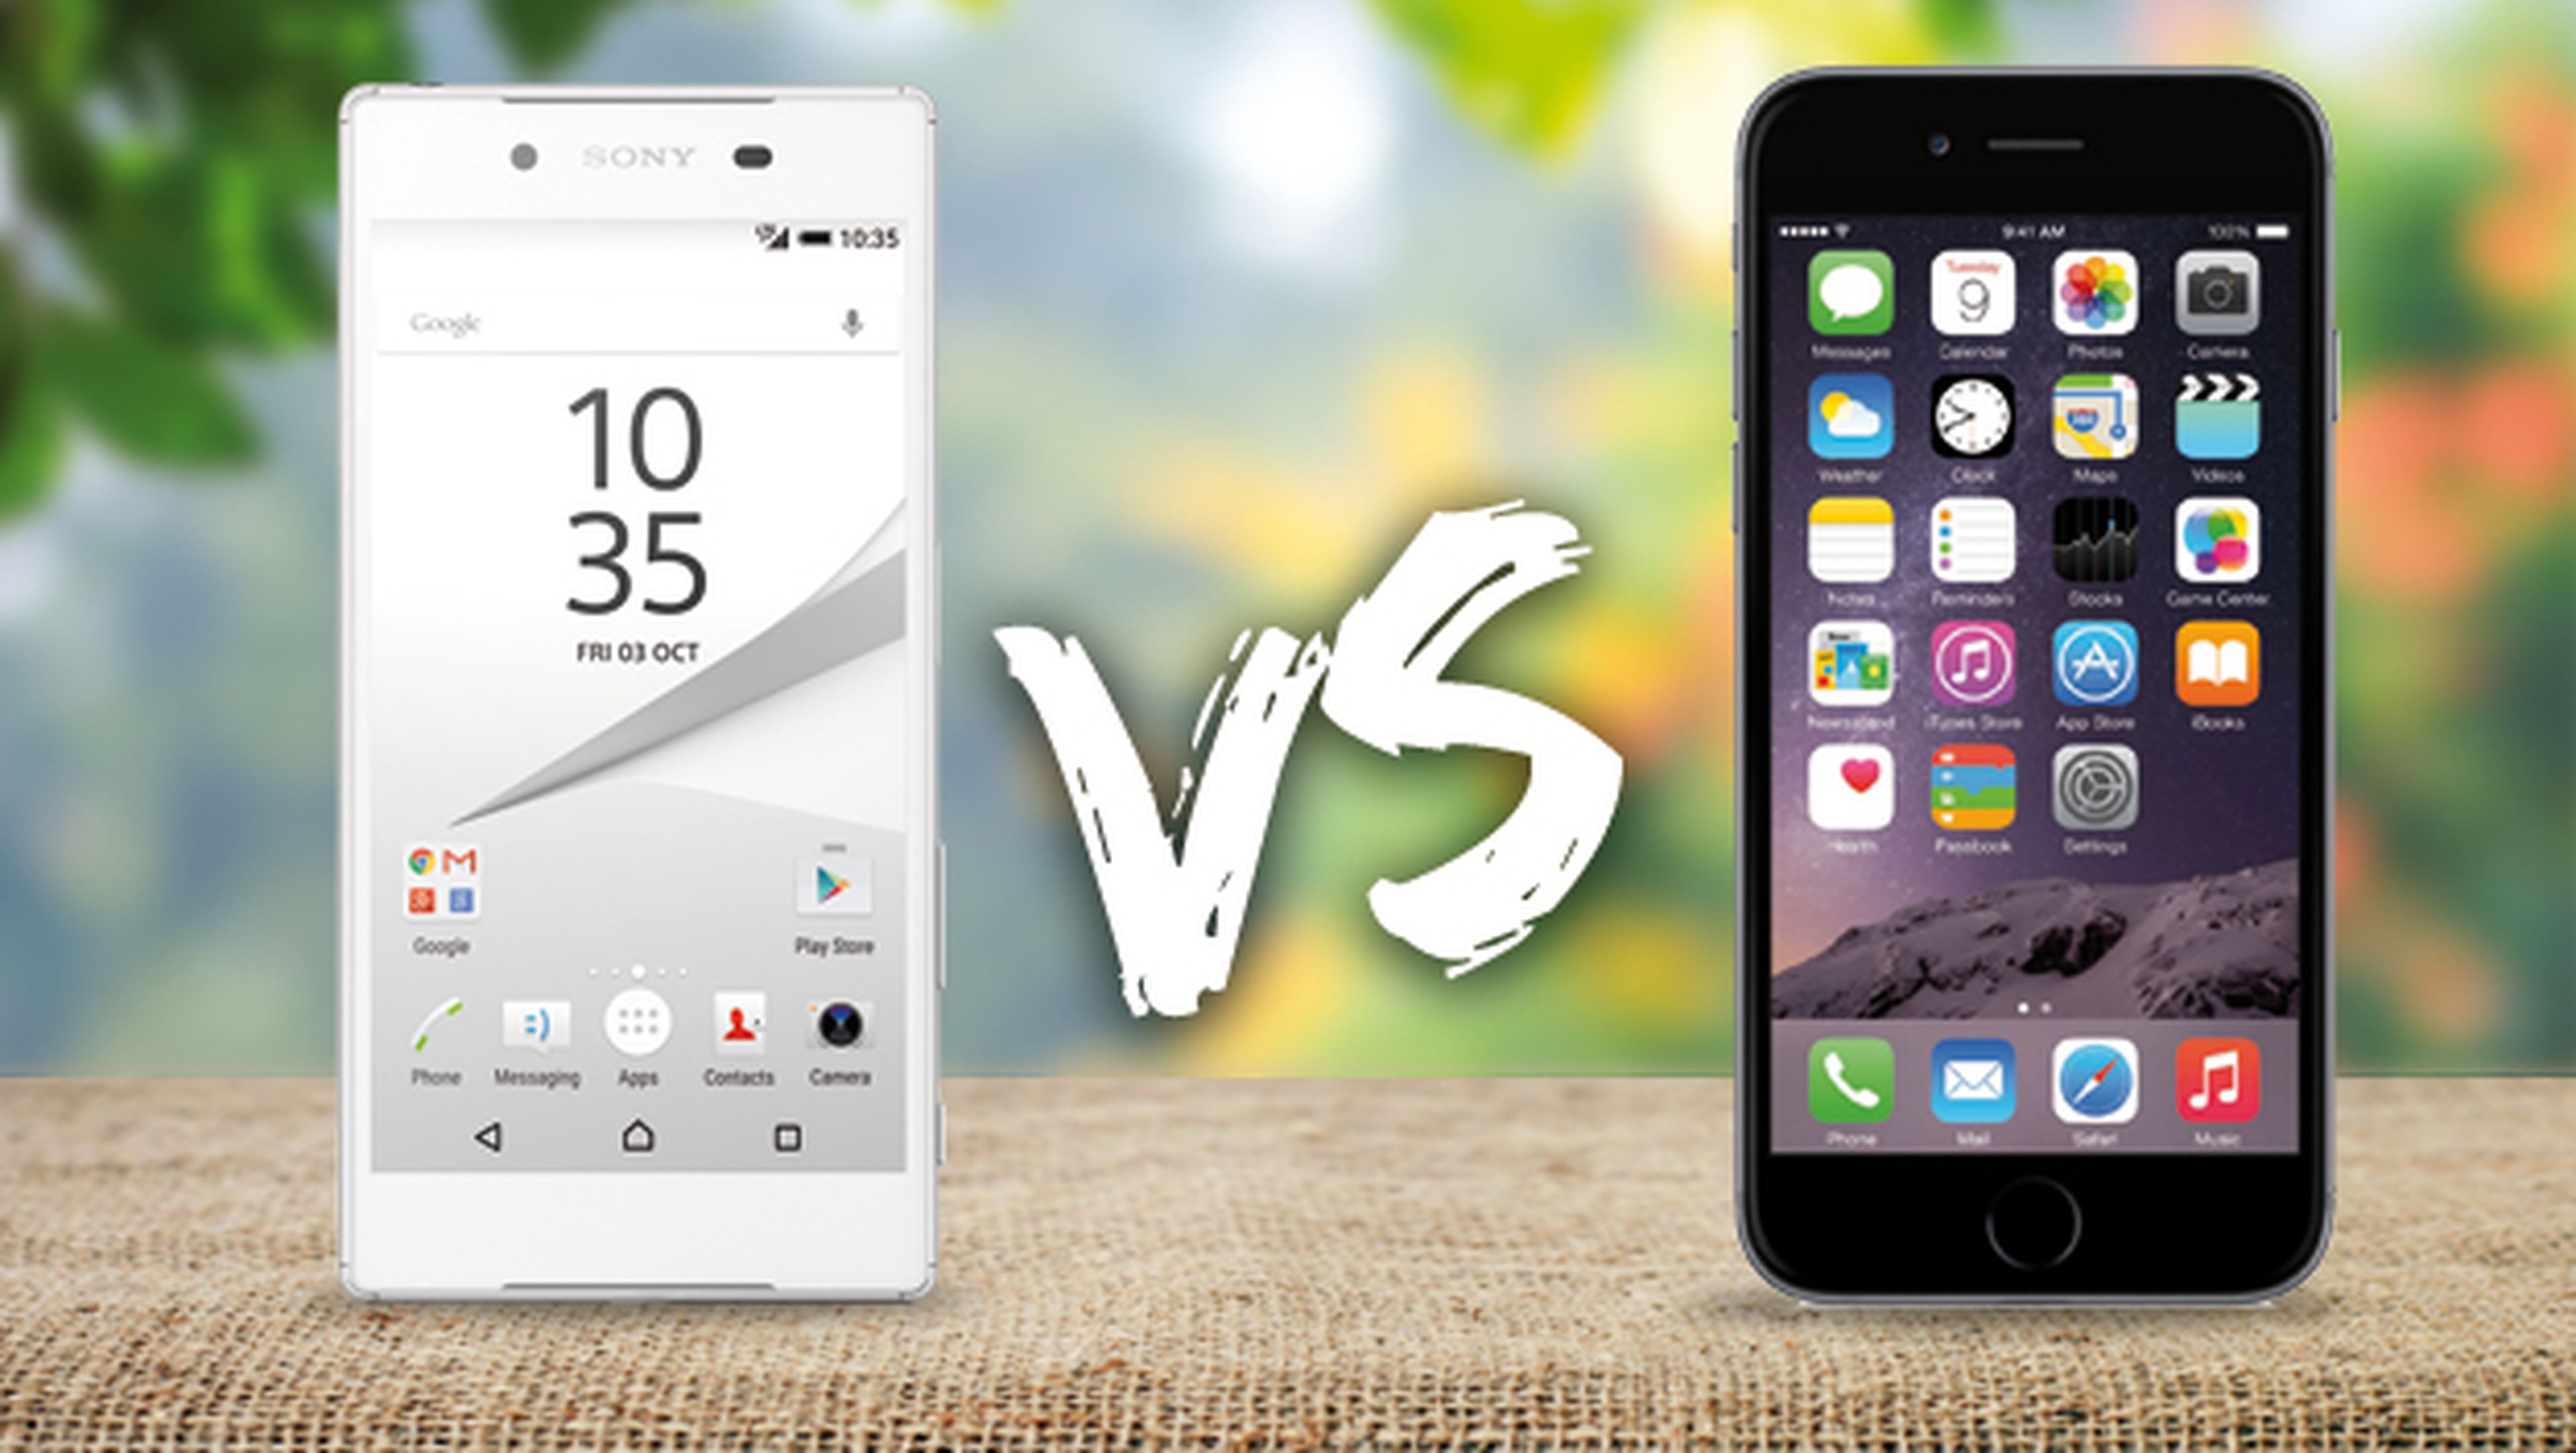 Sony Xperia Z5 vs iPhone 6 comparativa caracteristicas precio comprar